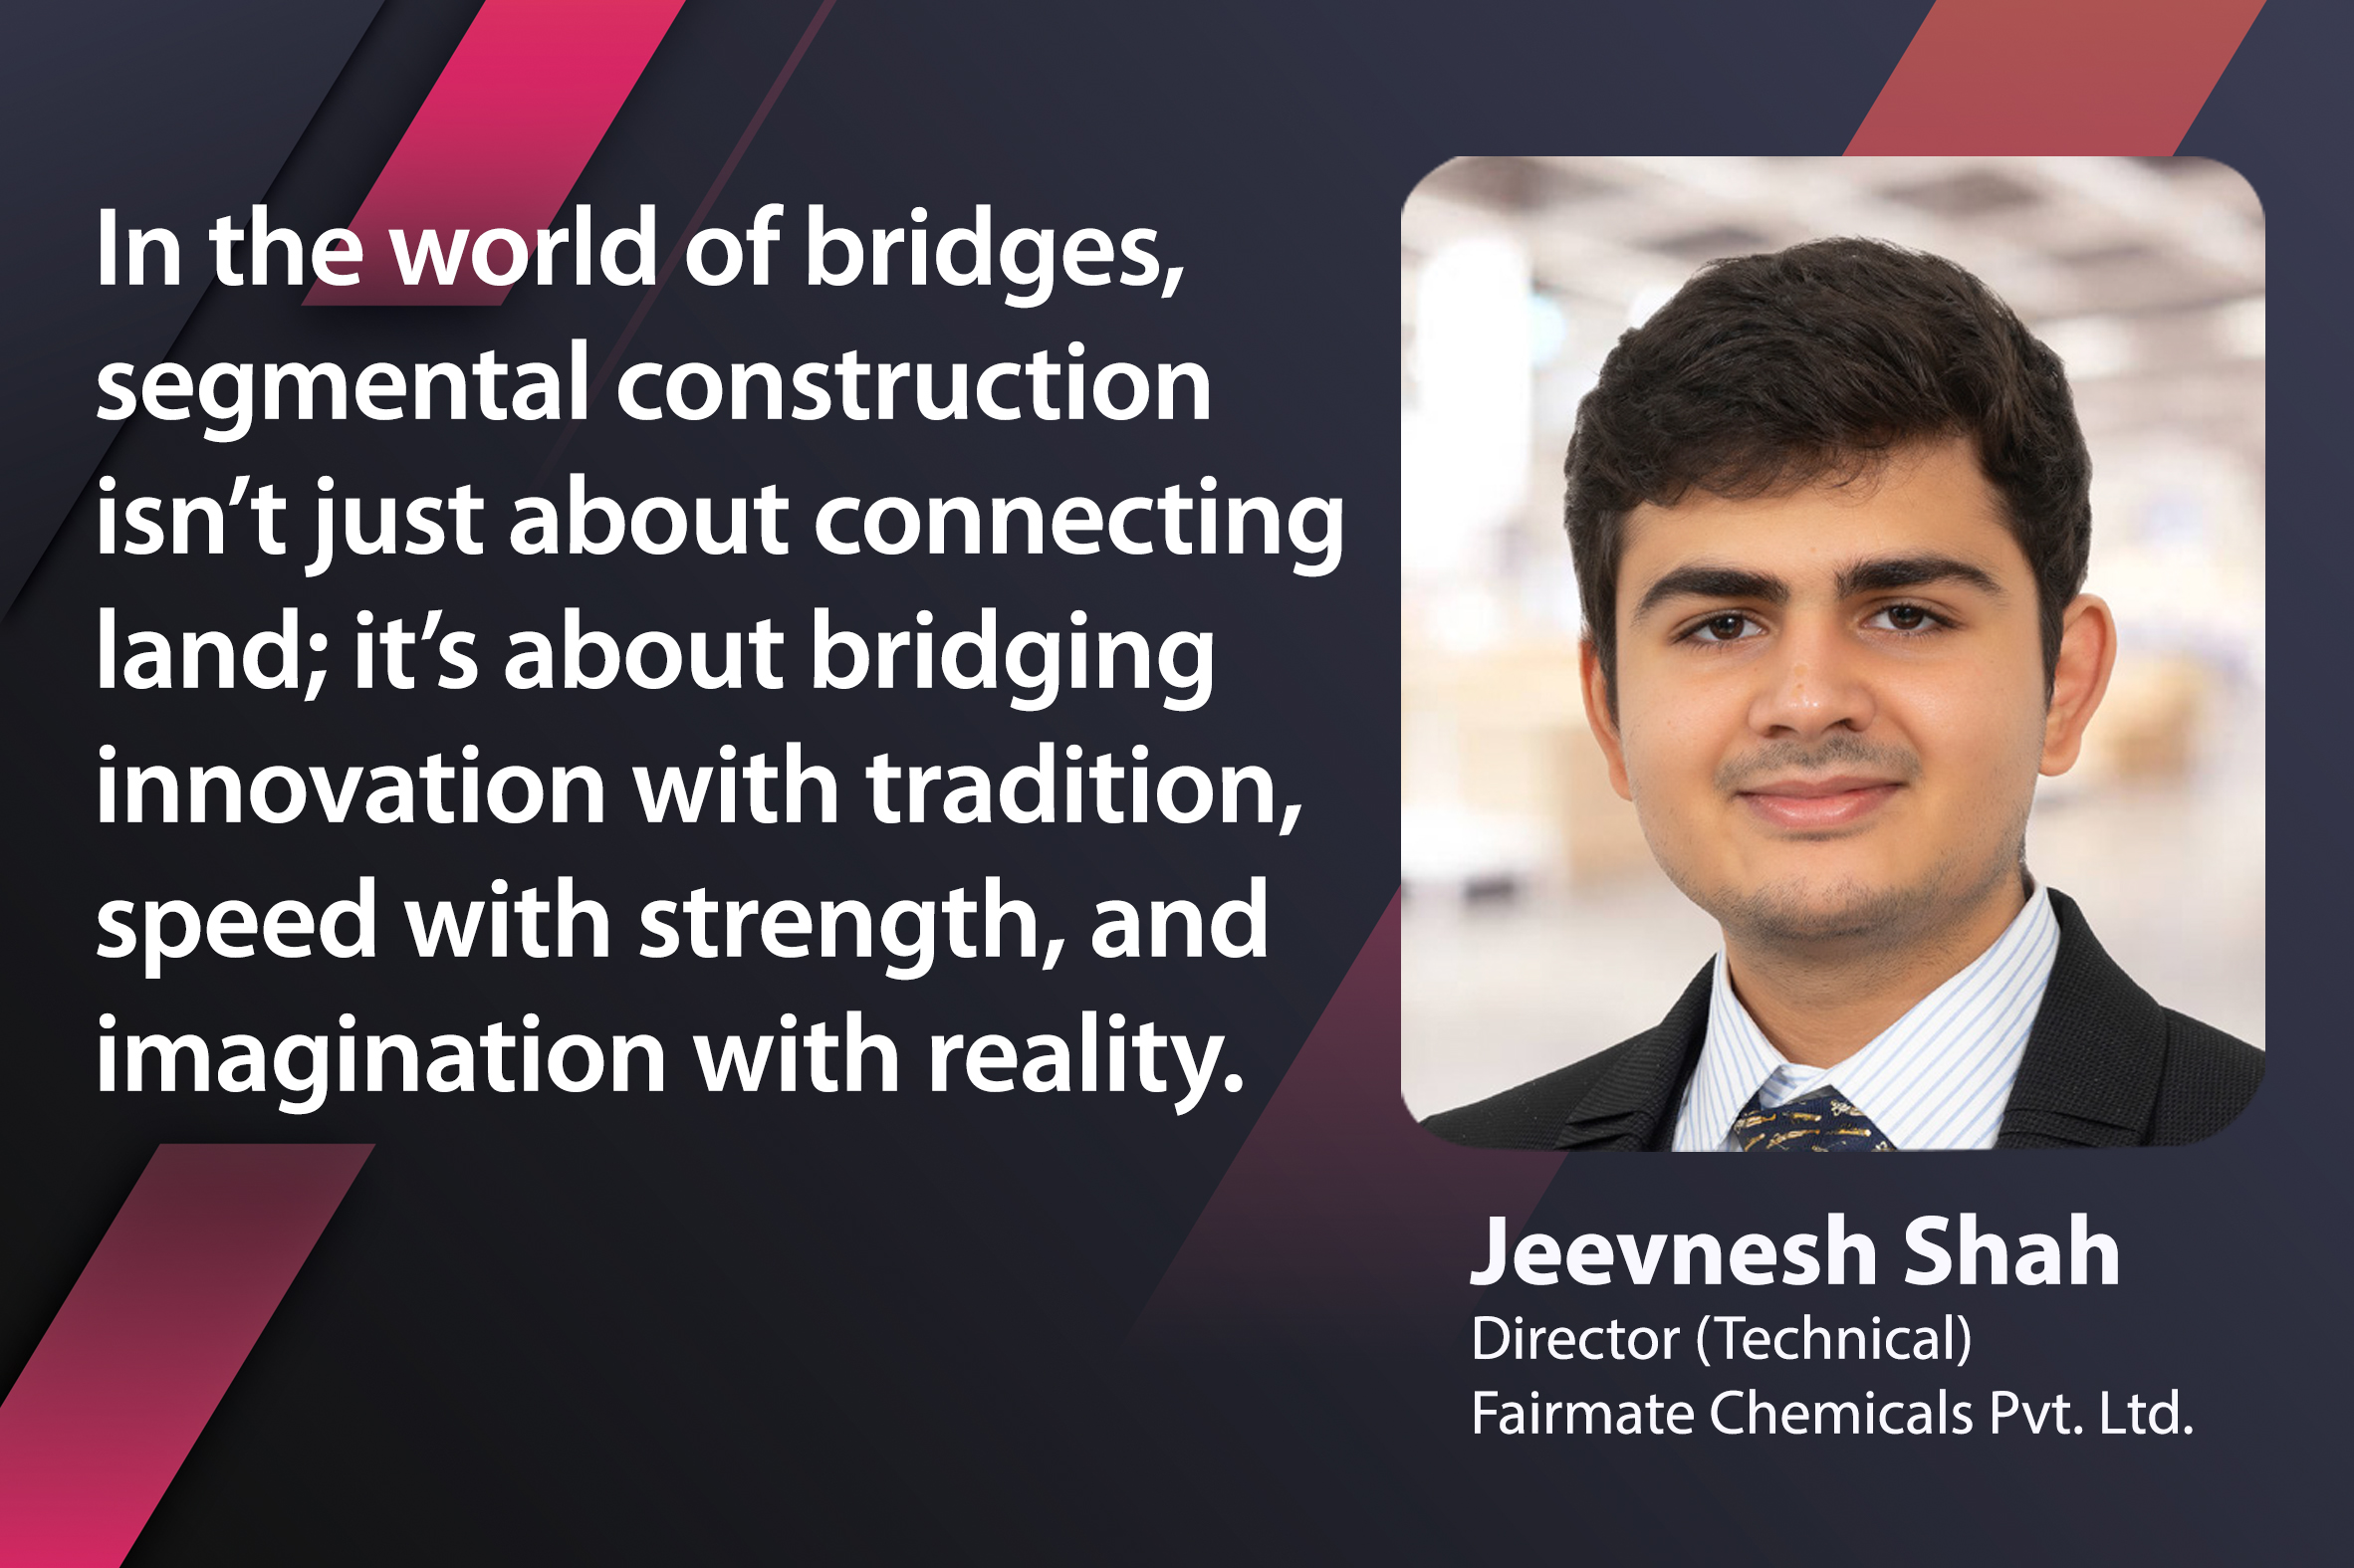 Advancing bridge construction with cutting-edge technology